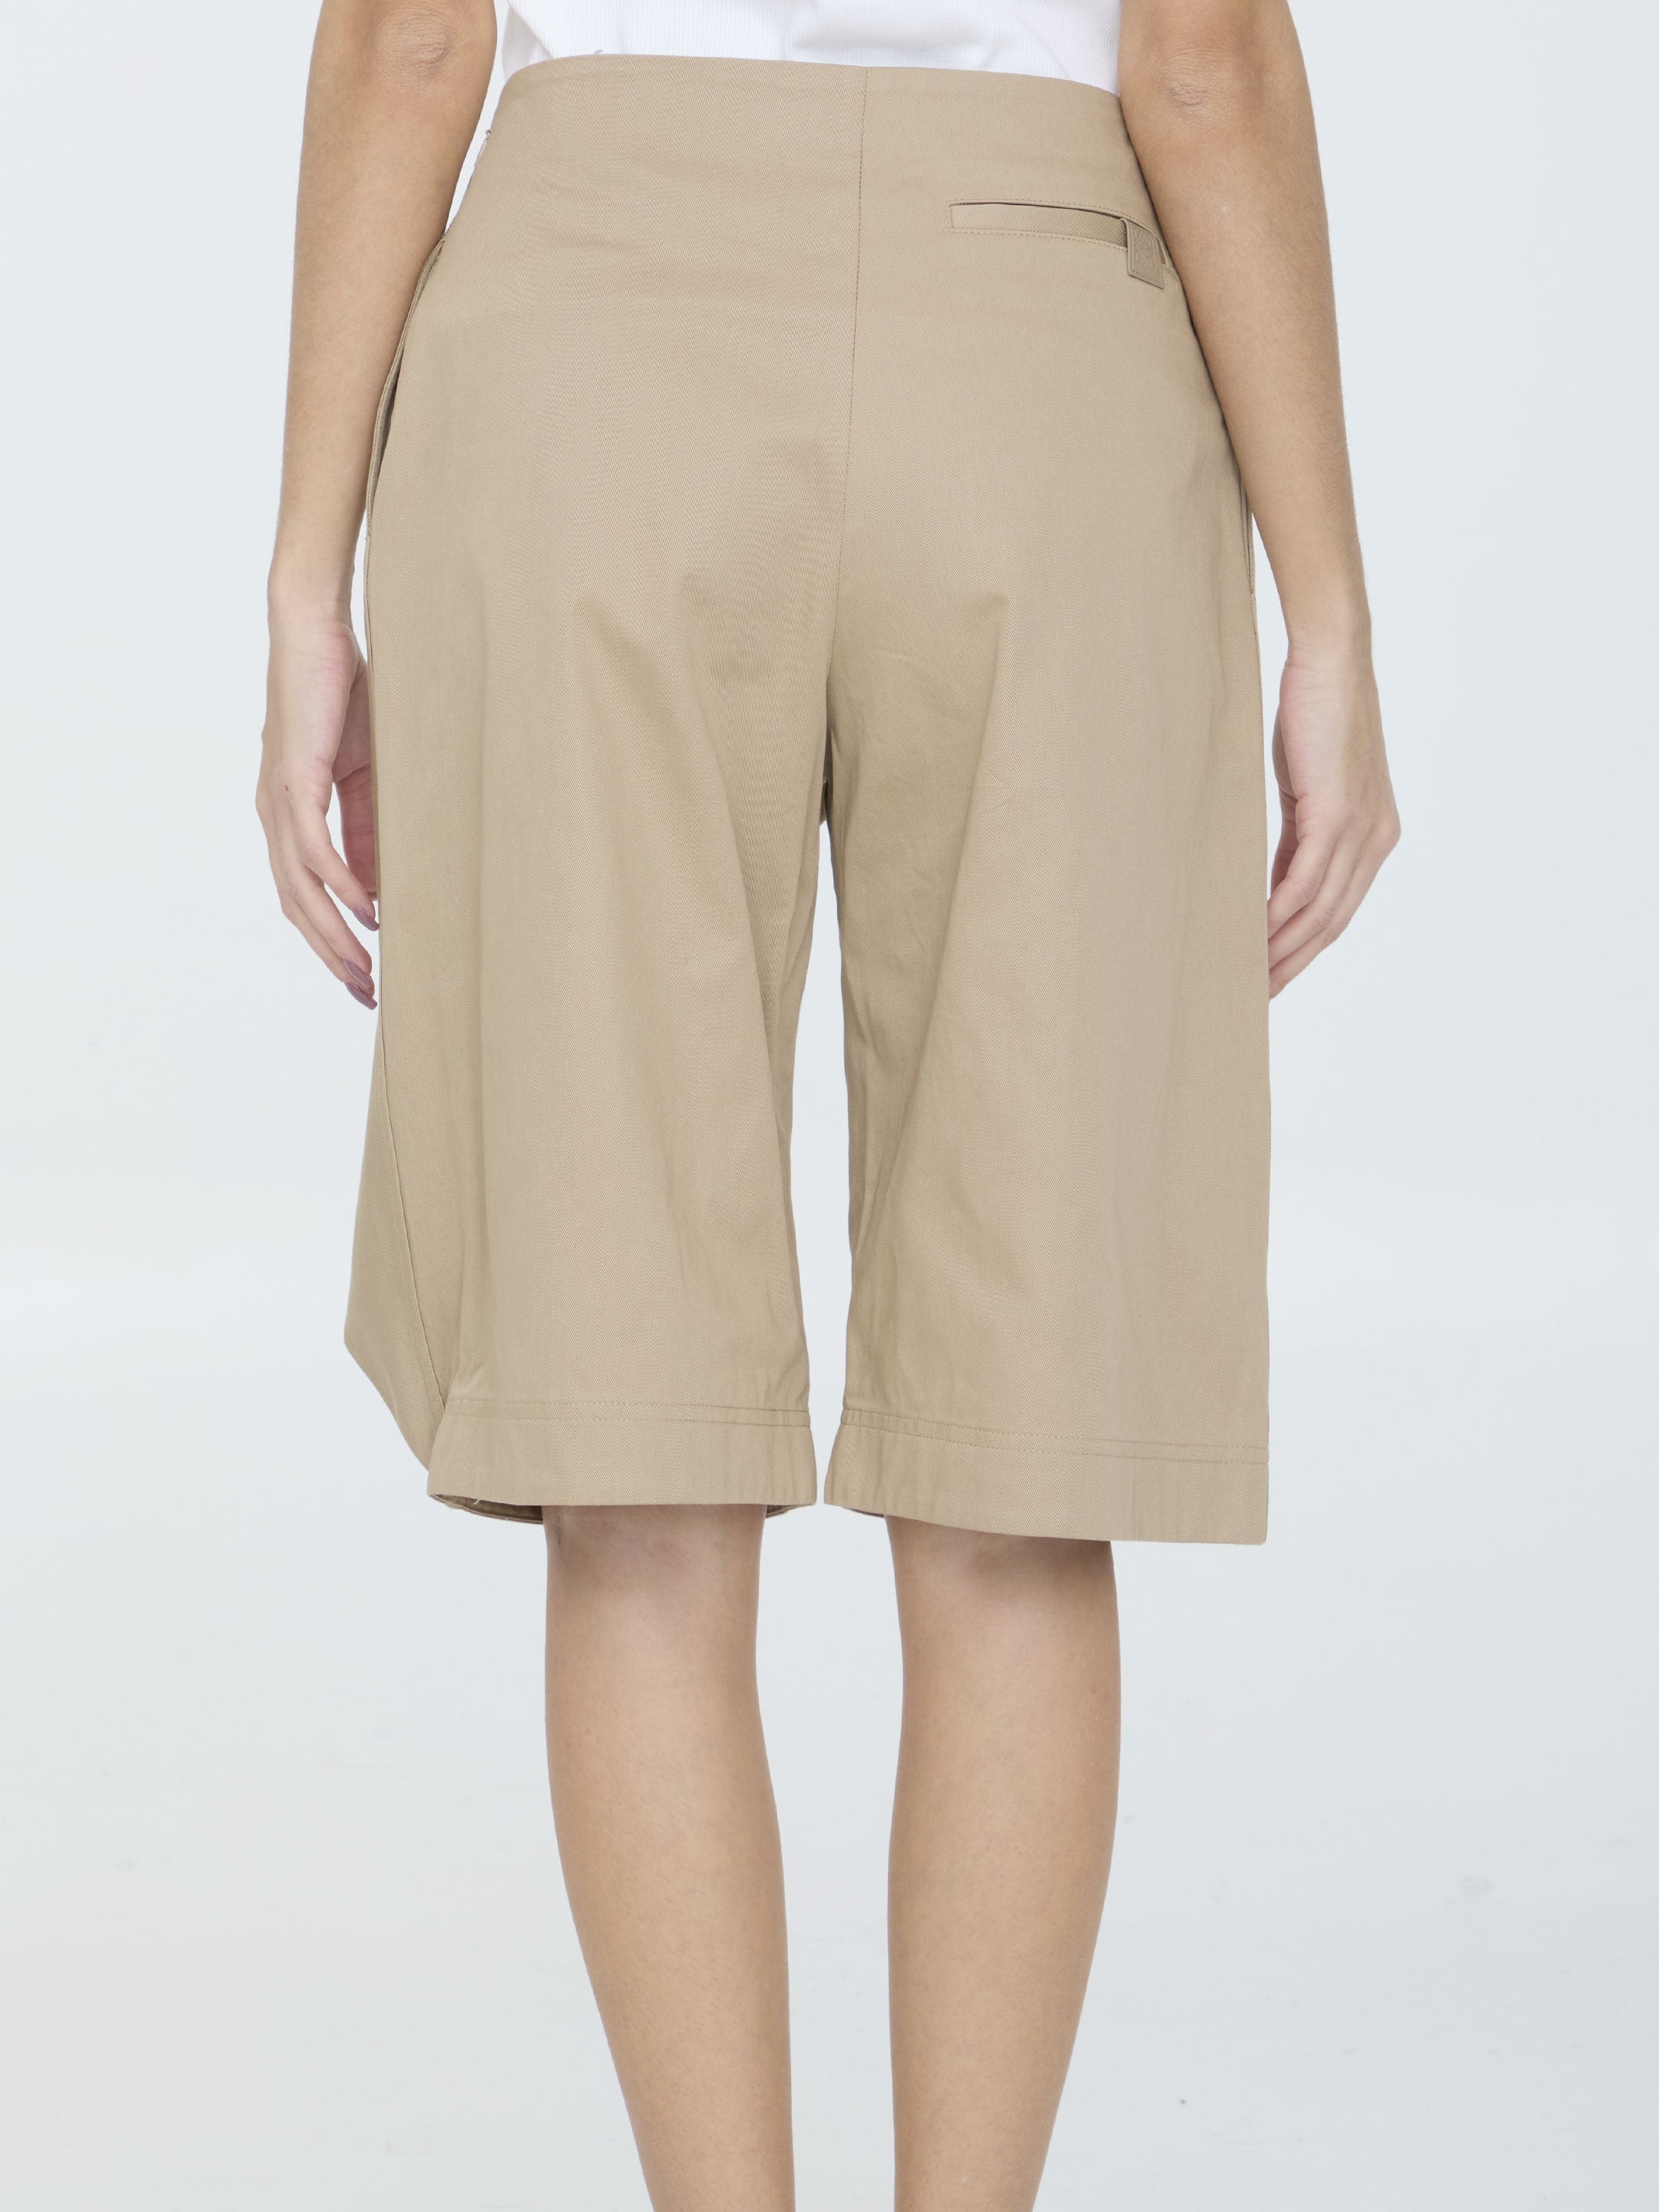 Cotton bermuda shorts